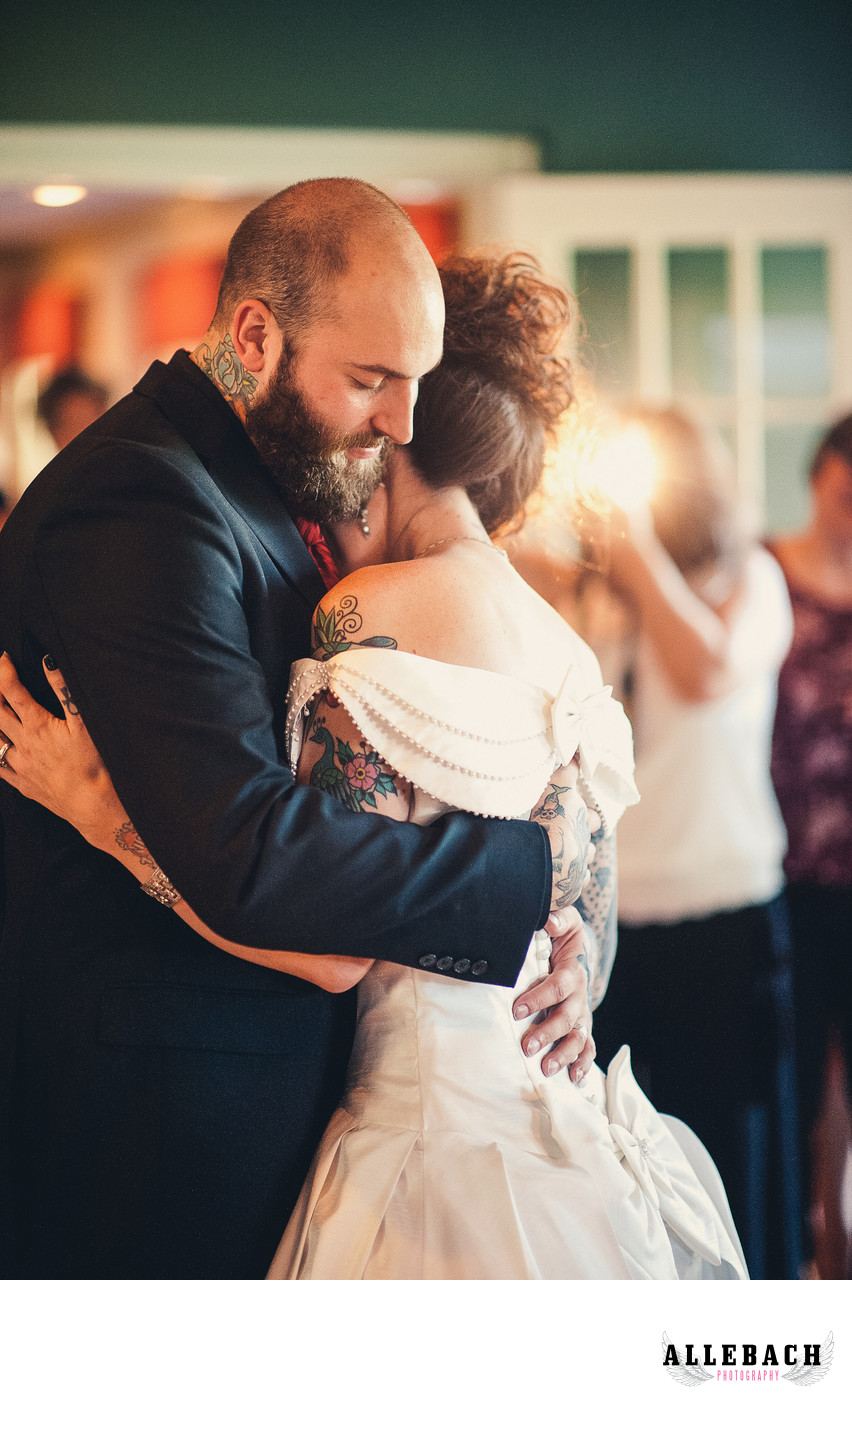 Tattooed Bride and Groom Dancing at Wedding